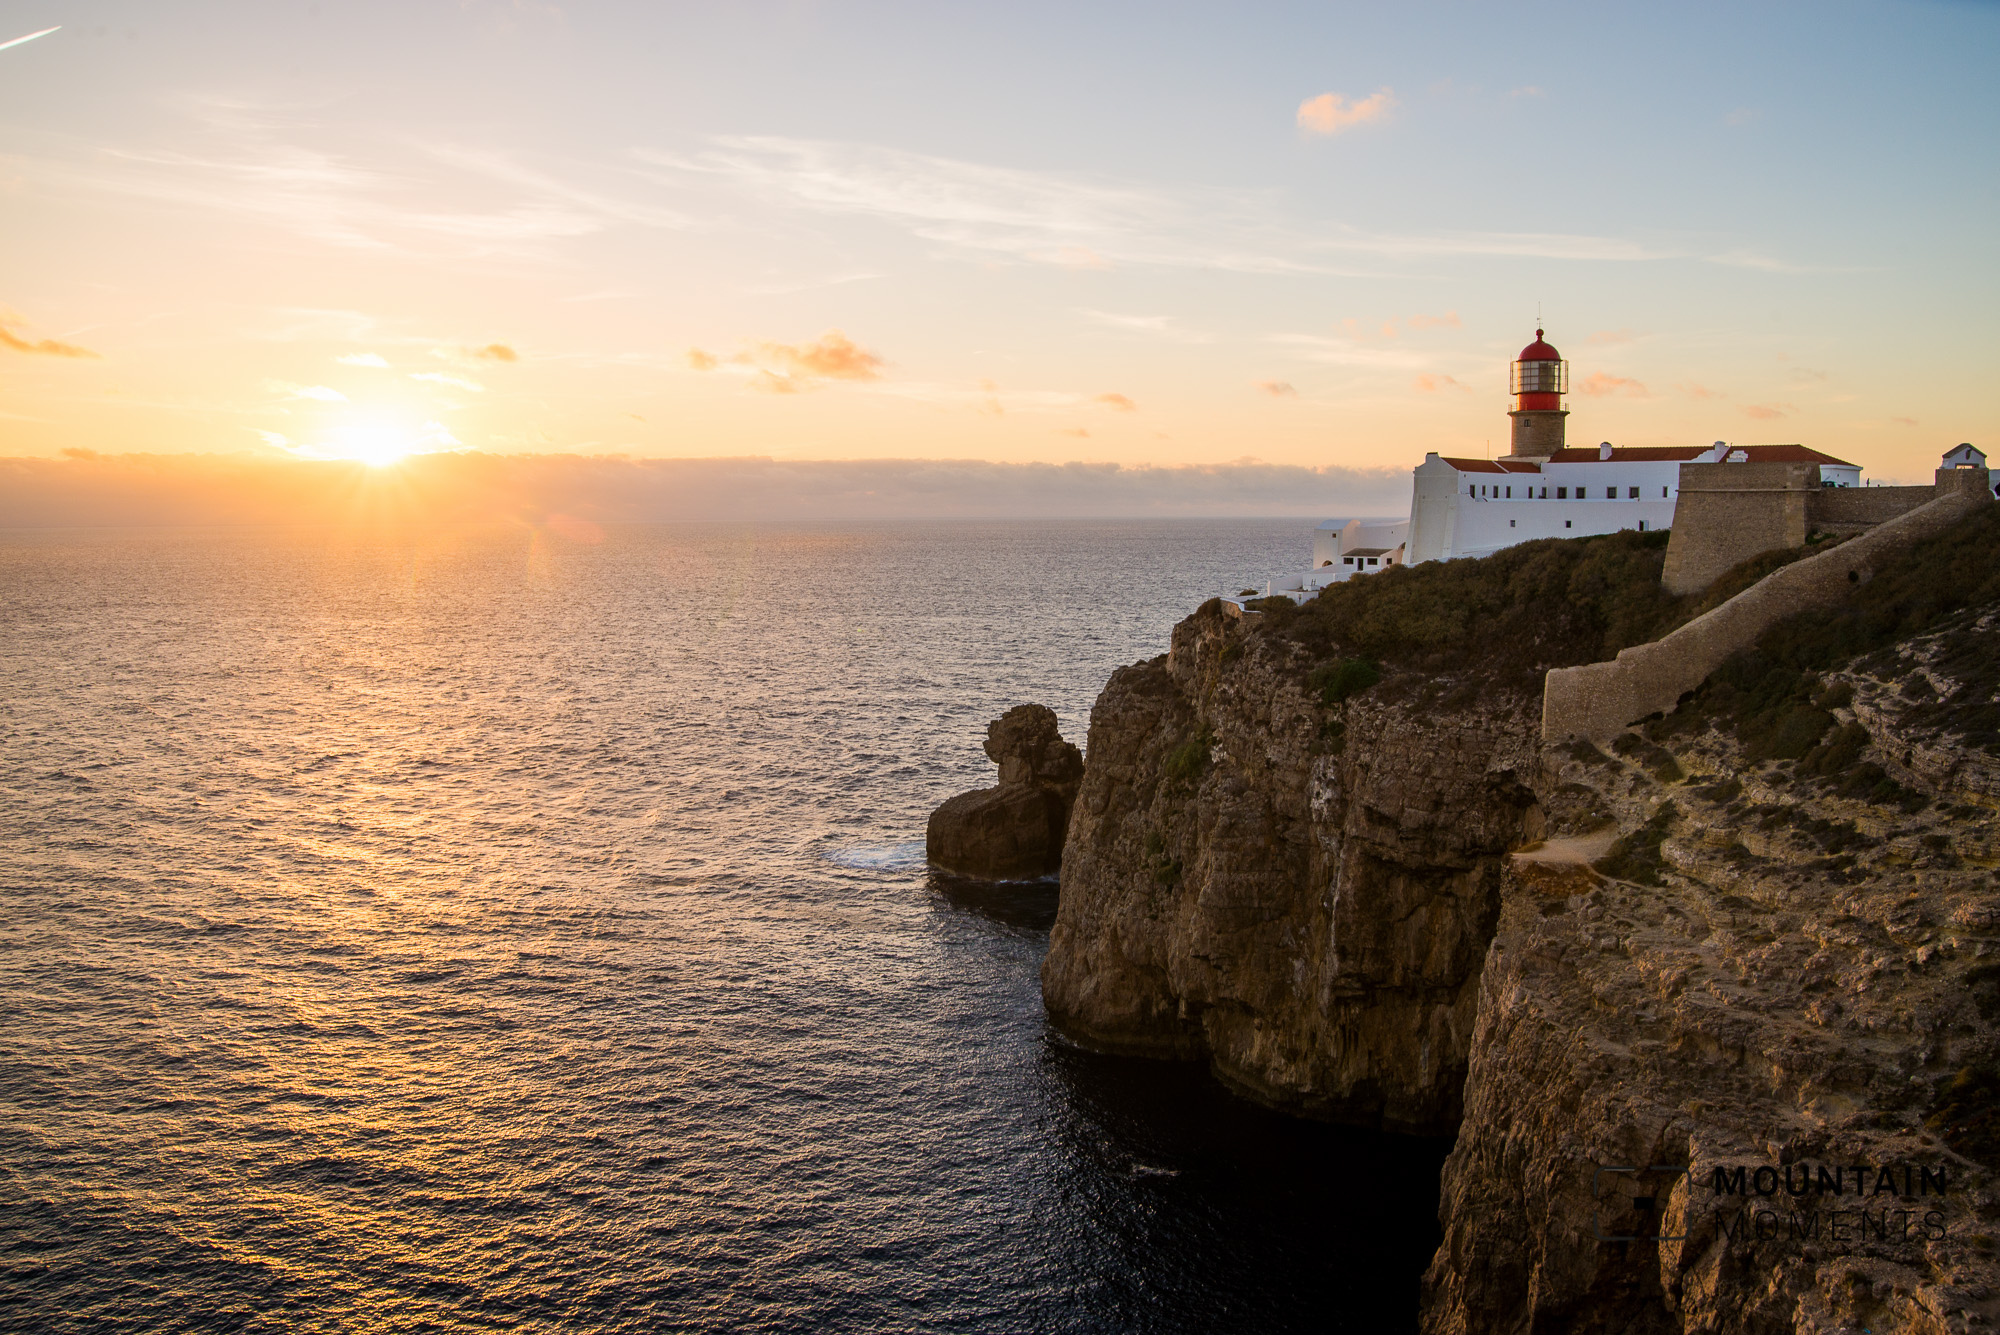 Photo Locations Algarve: Most Instagram-Worthy Places in the Algarve